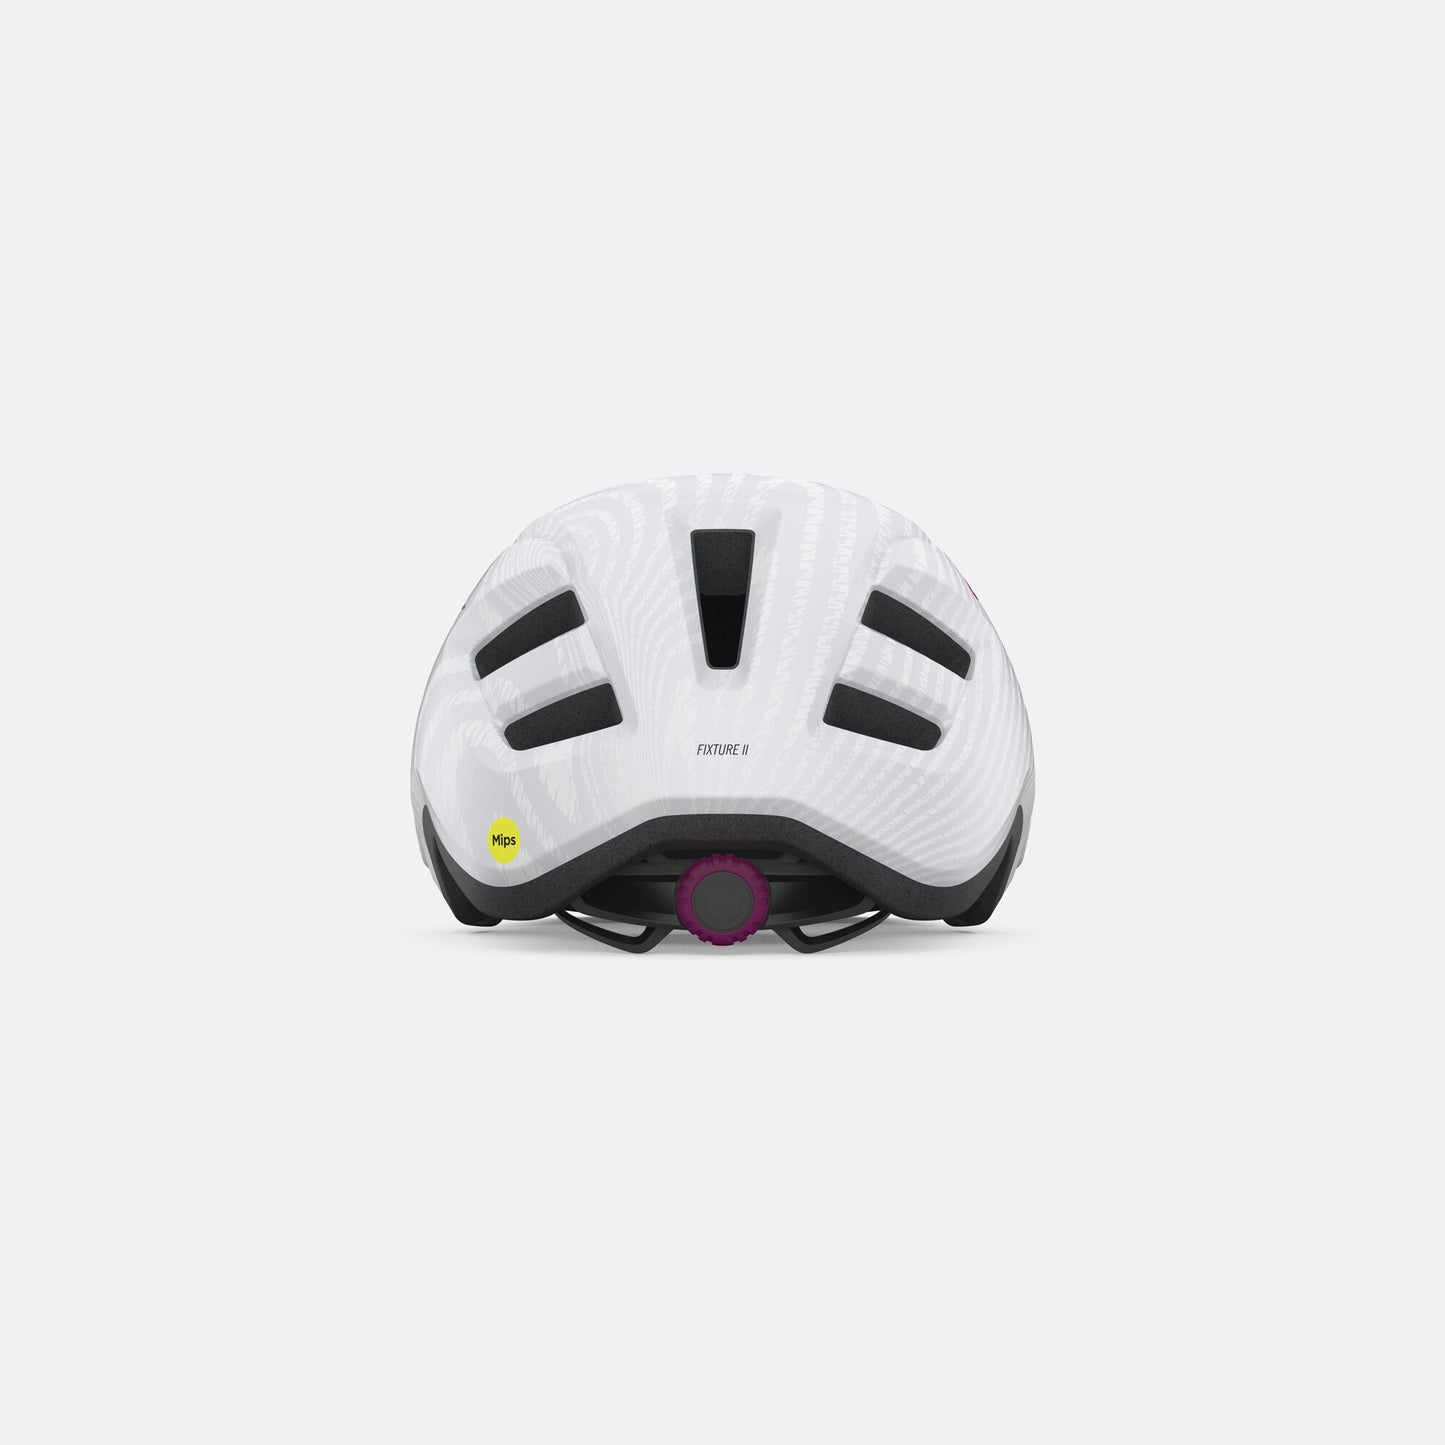 Giro Youth Fixture MIPS II Helmet Matte White Pink Ripple UY Bike Helmets